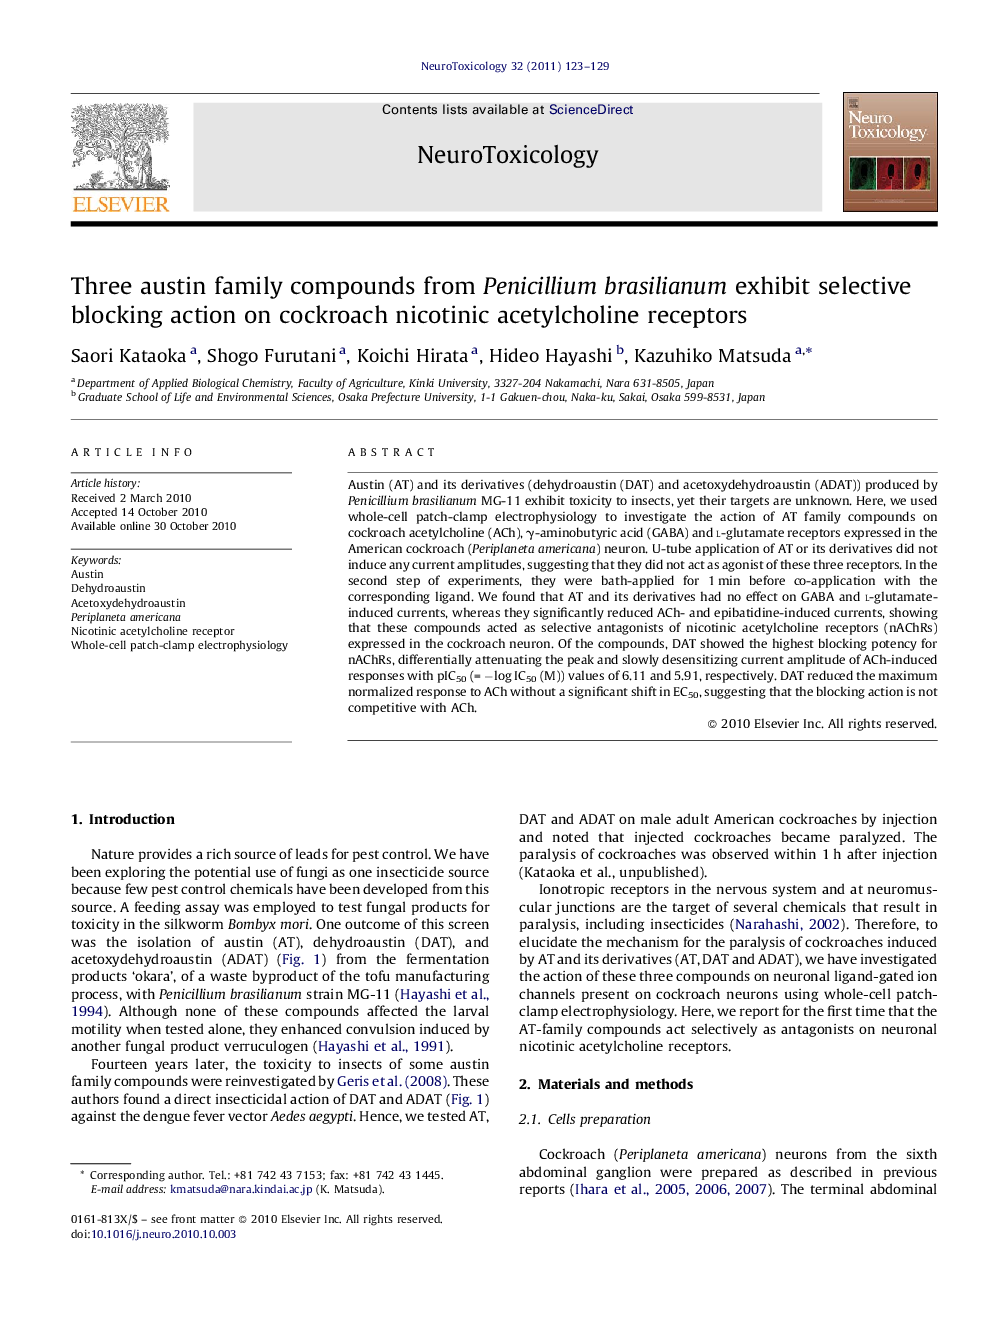 Three austin family compounds from Penicillium brasilianum exhibit selective blocking action on cockroach nicotinic acetylcholine receptors